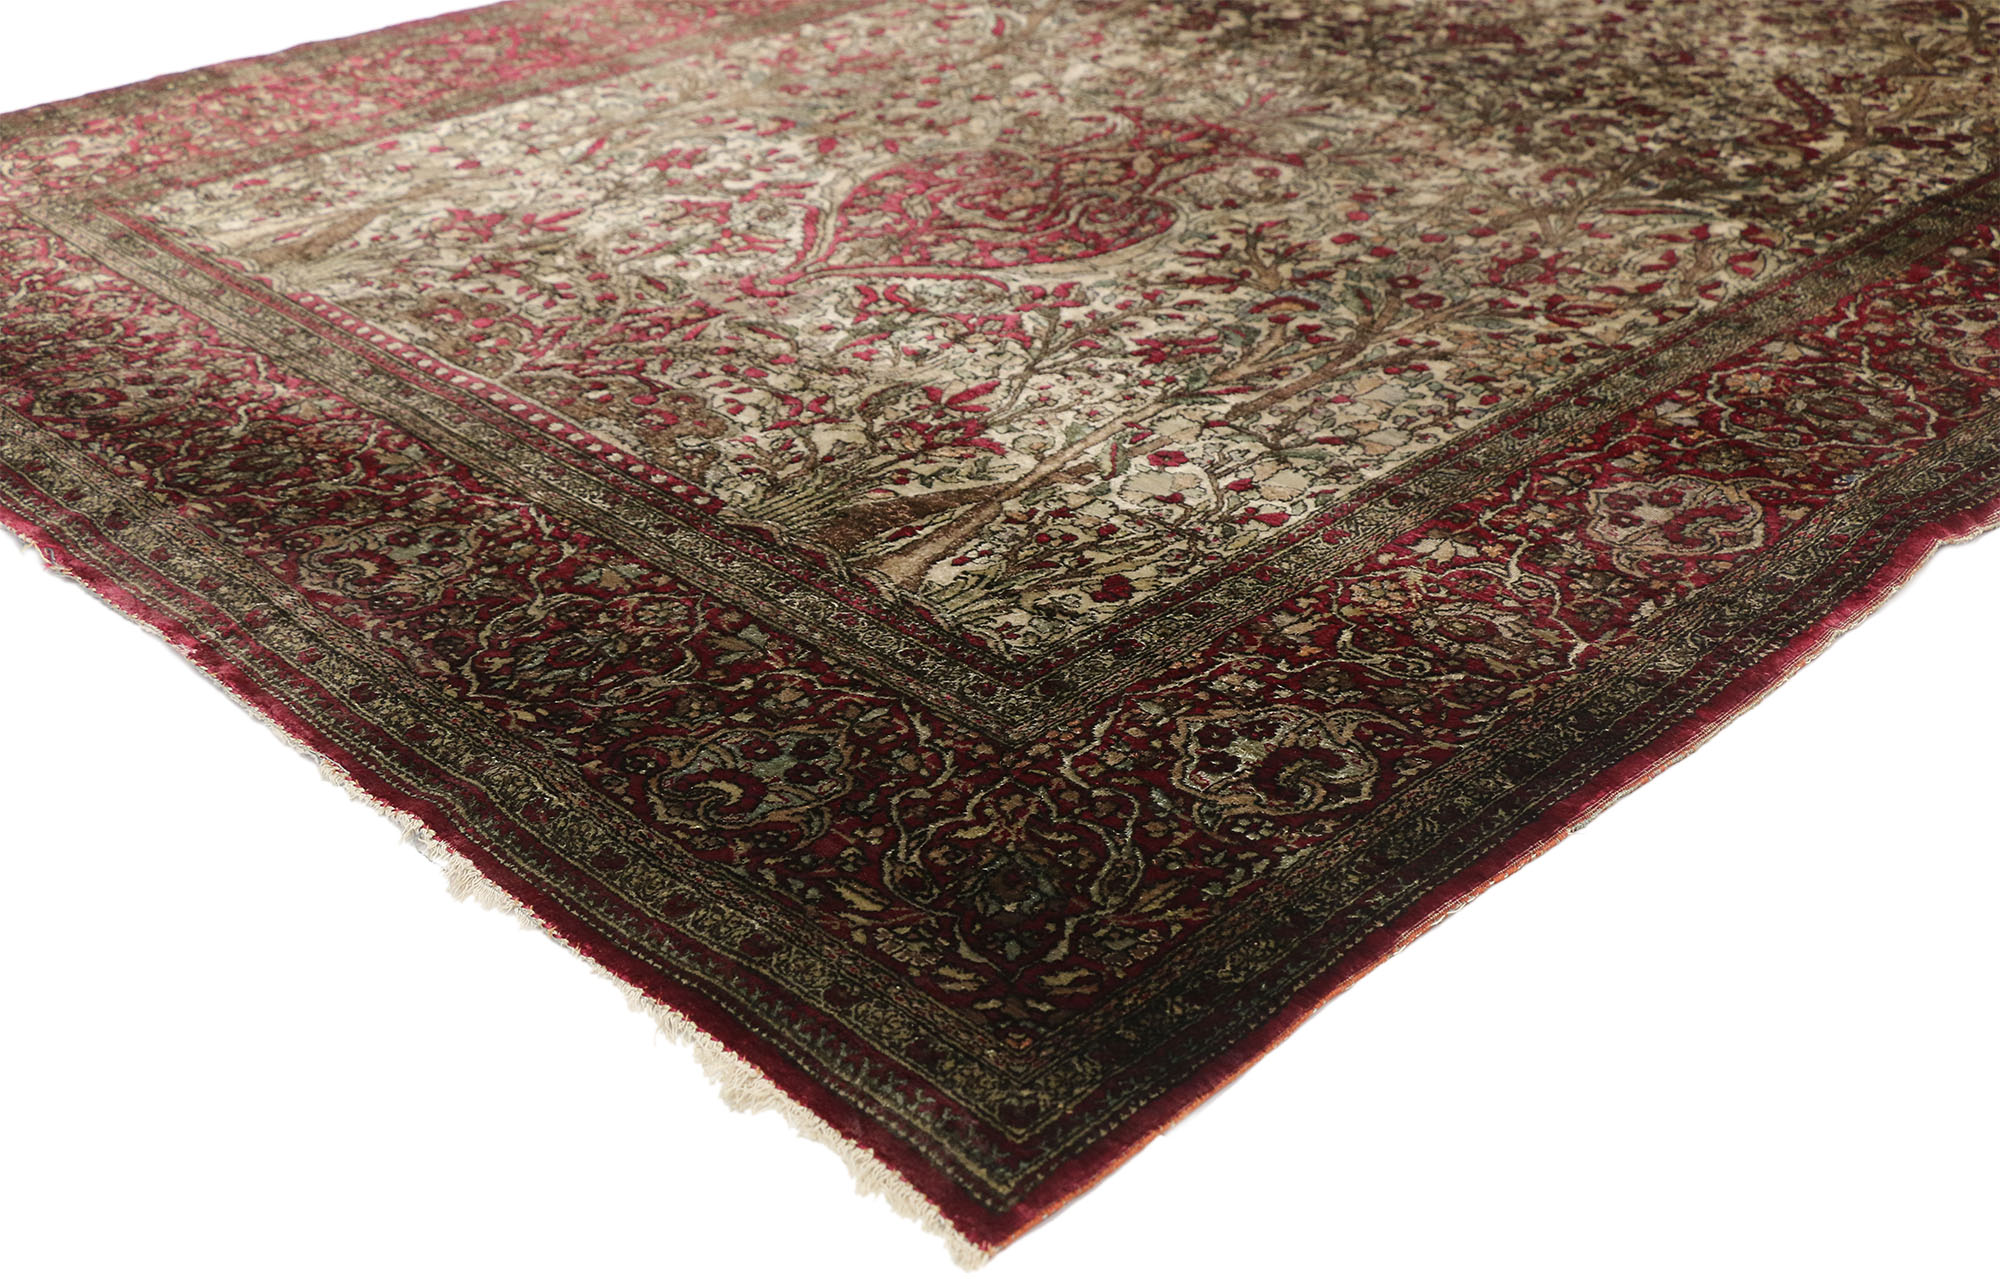 Vintage Persian Kashan Rug – Size: 4' X 5' 10